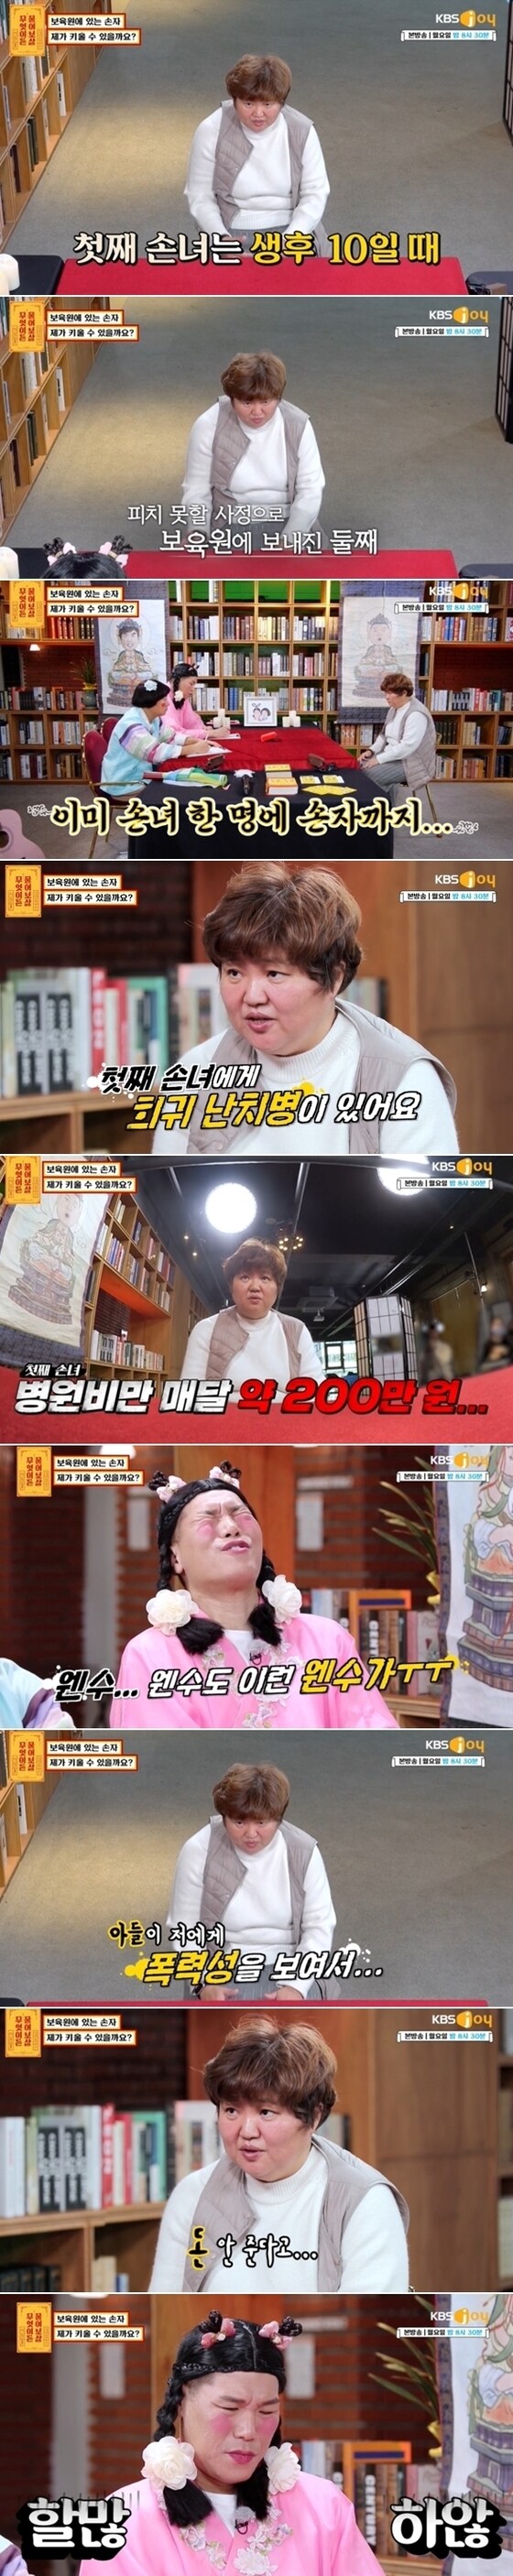 KBS joy 예능프로그램 '무엇이든 물어보살' 방송 화면 갈무리 © 뉴스1